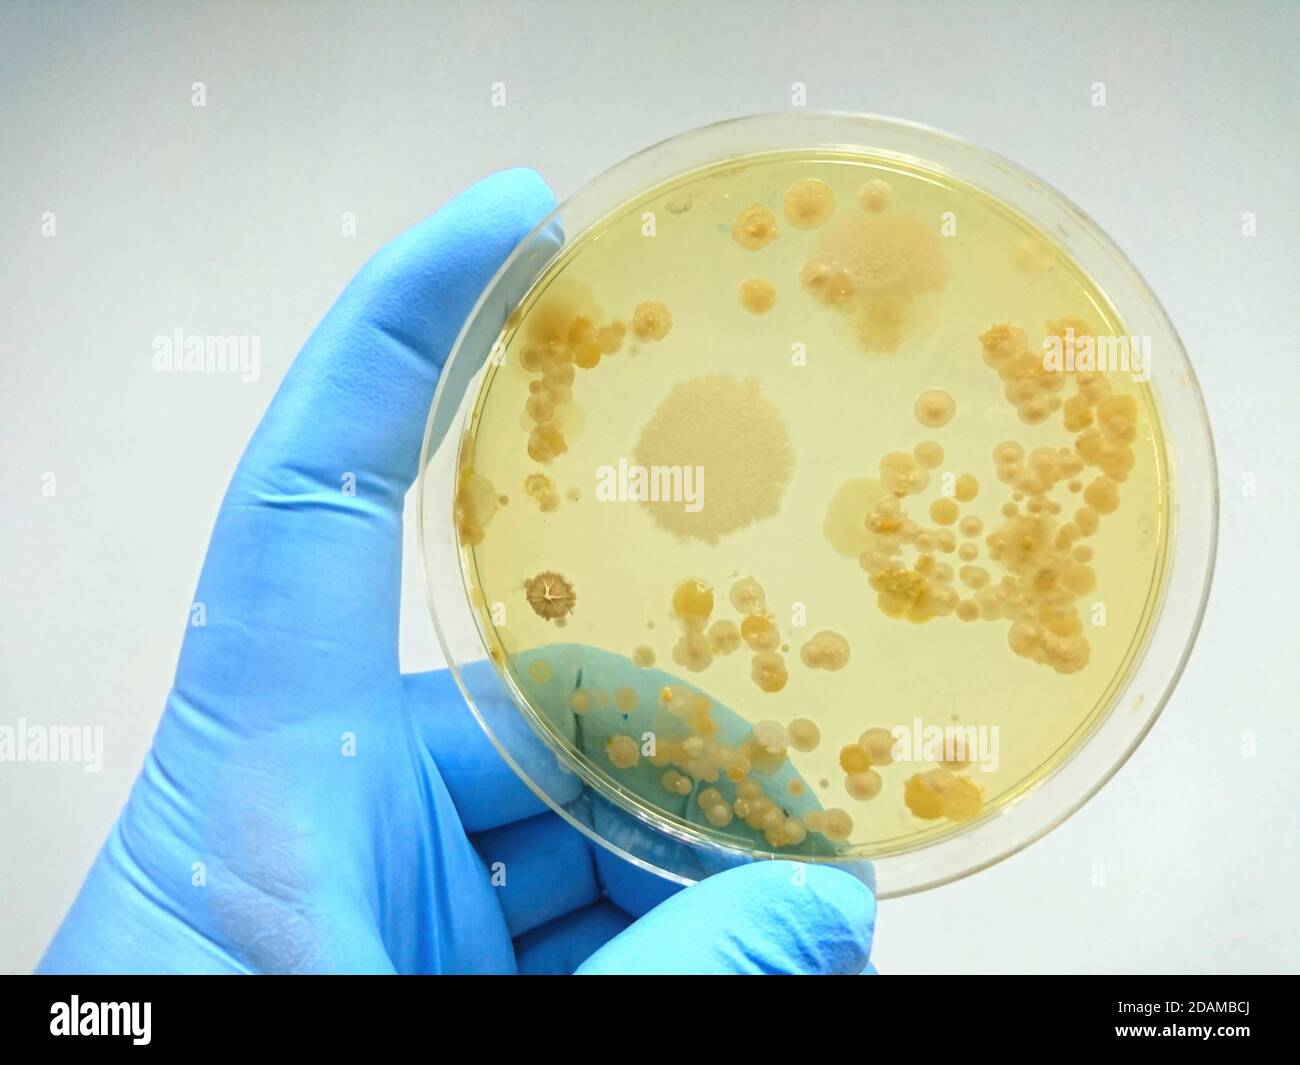 Kolonie von Bakterien auf Kulturmedium. Stockfoto